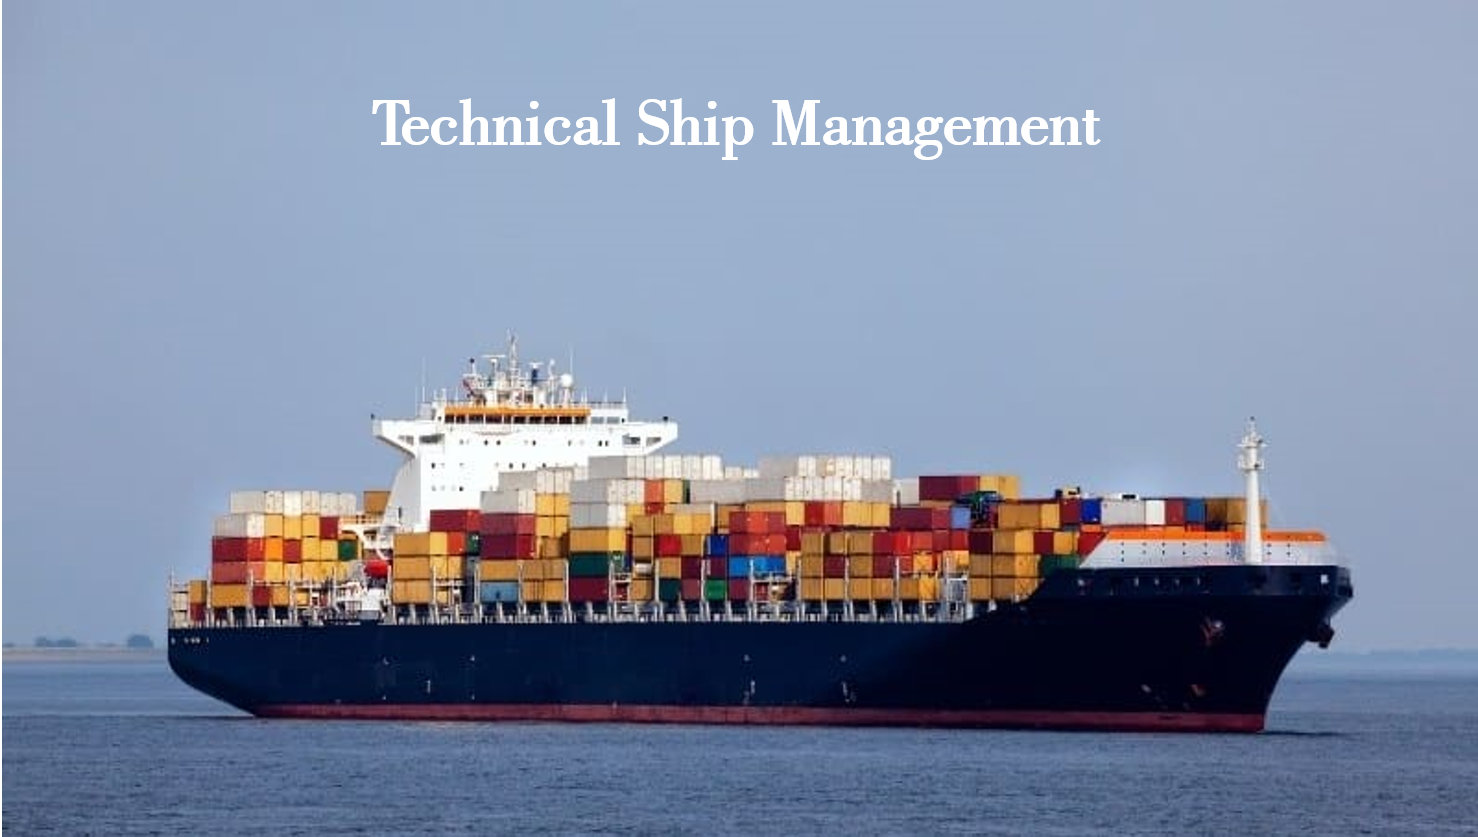 Technical ship management